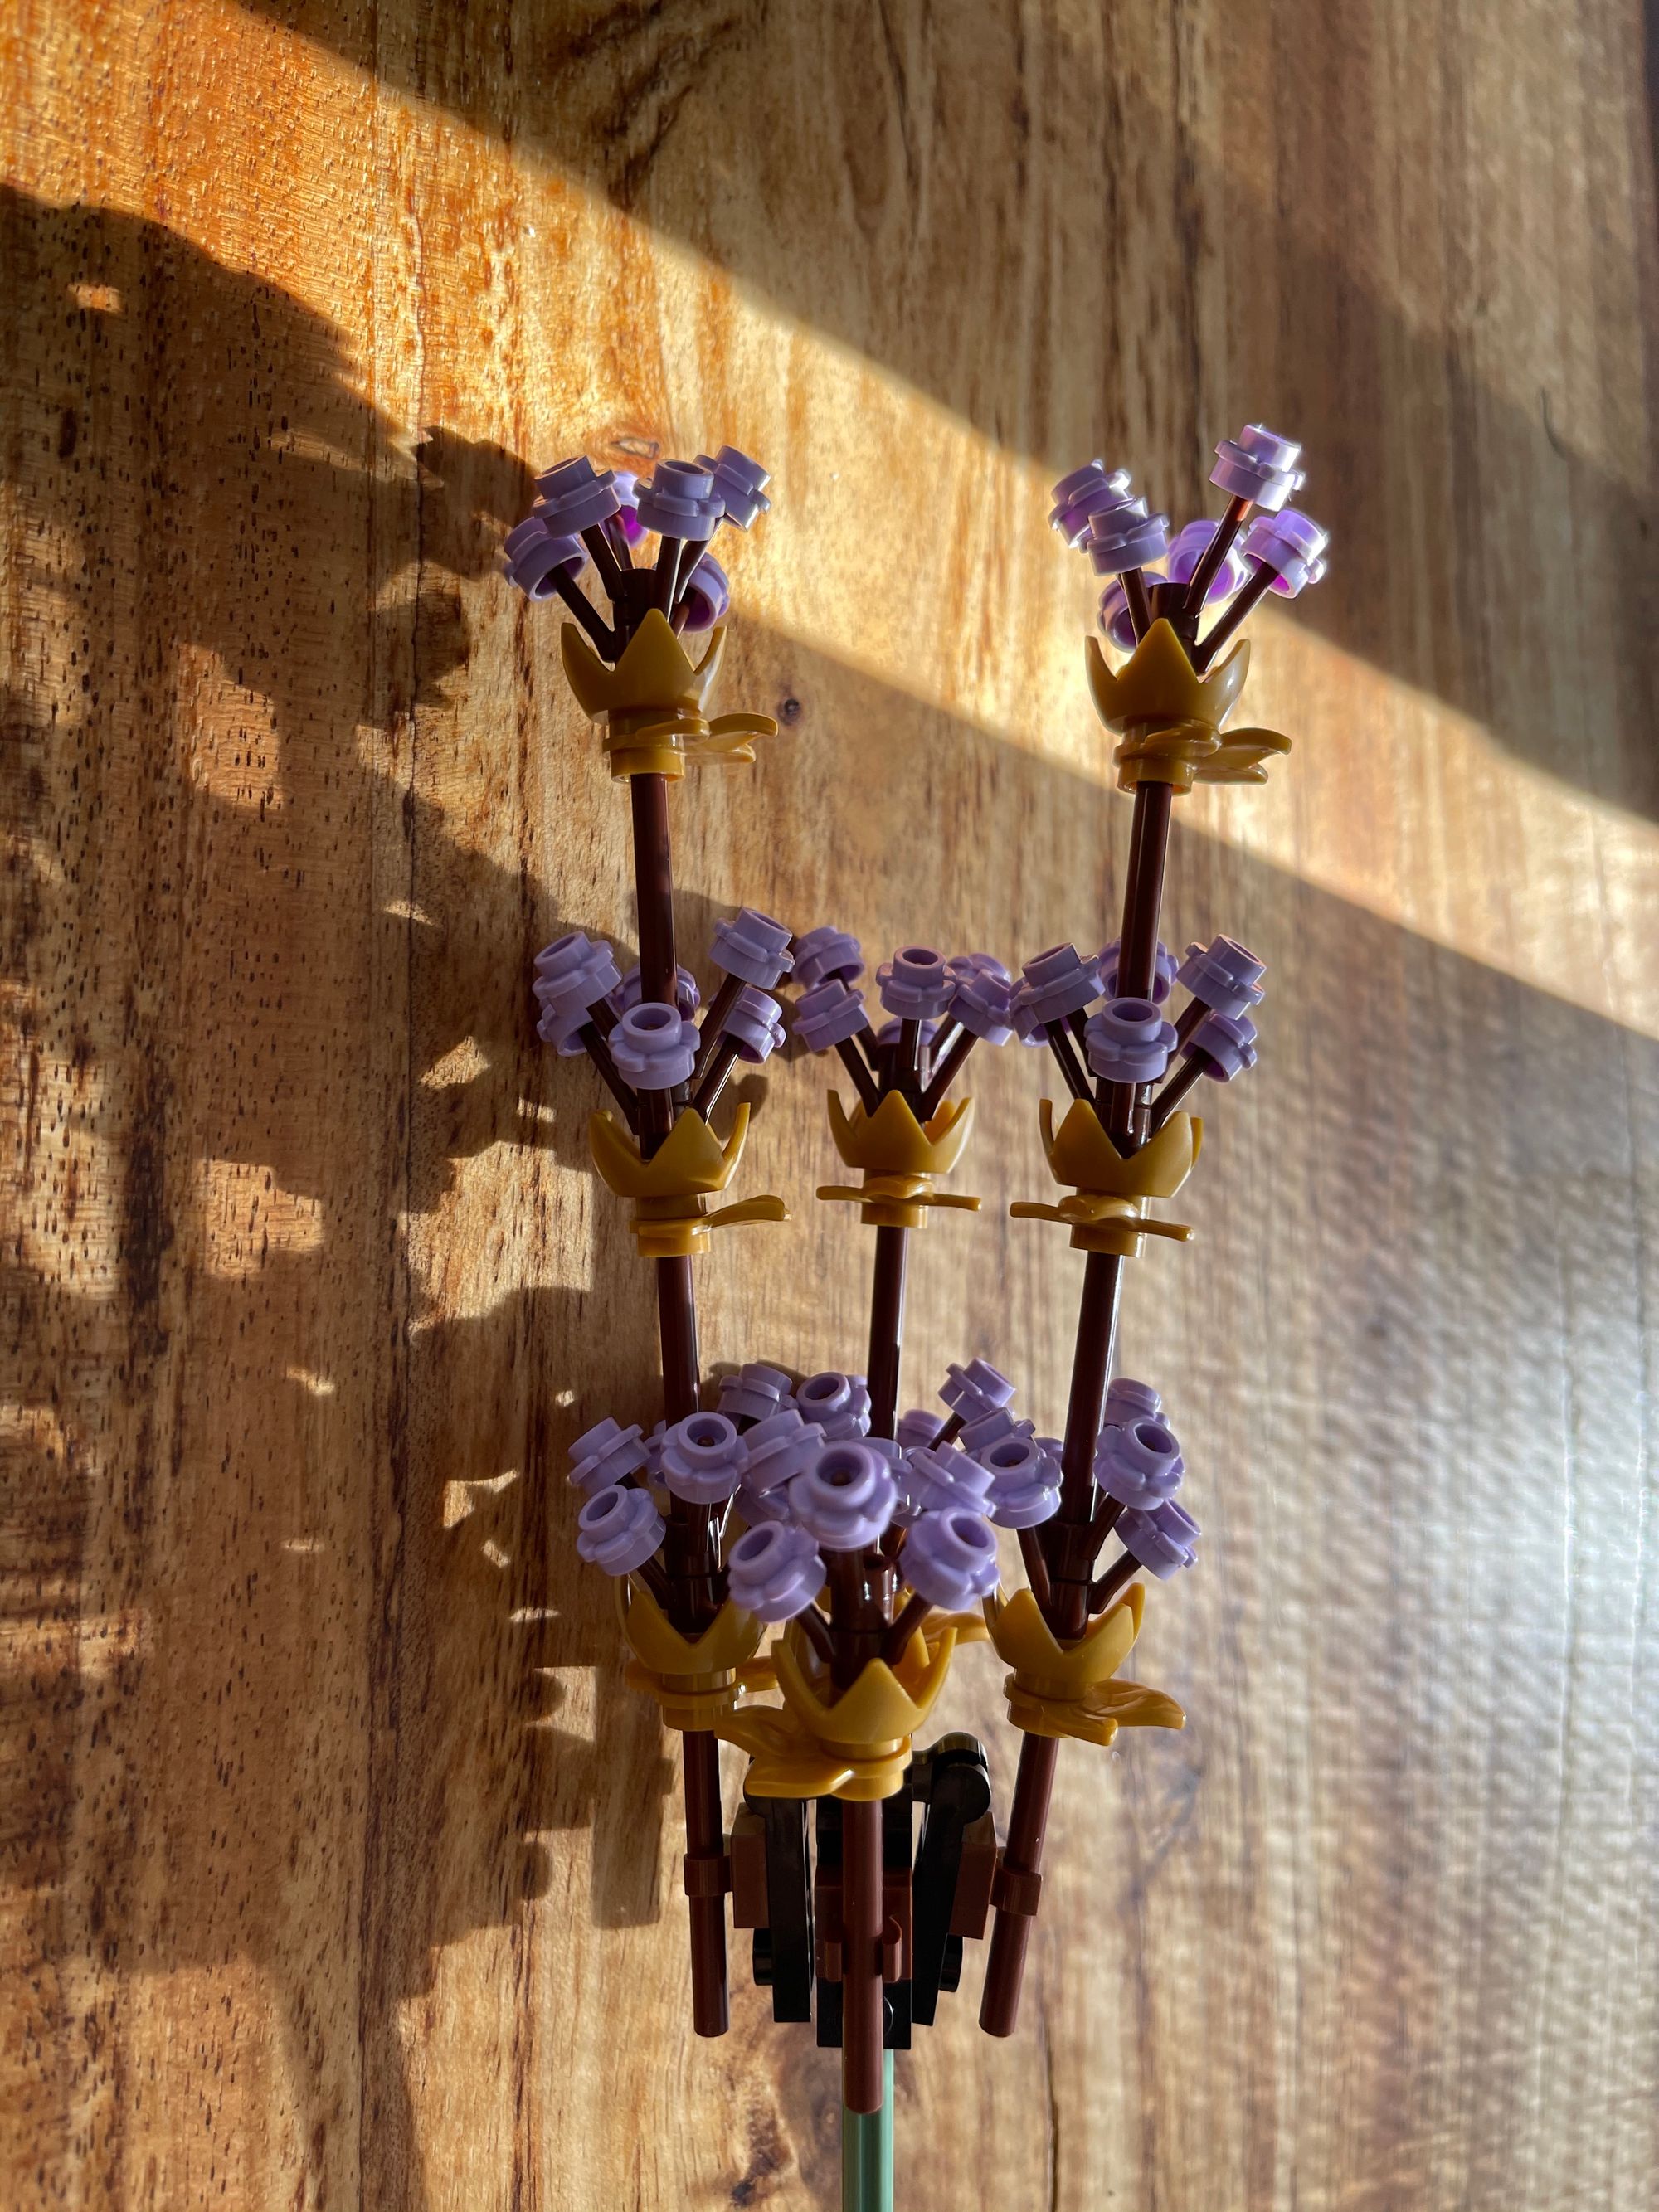 Make beautiful Lego flowers: Flower Bouquet set review - Craft Fix